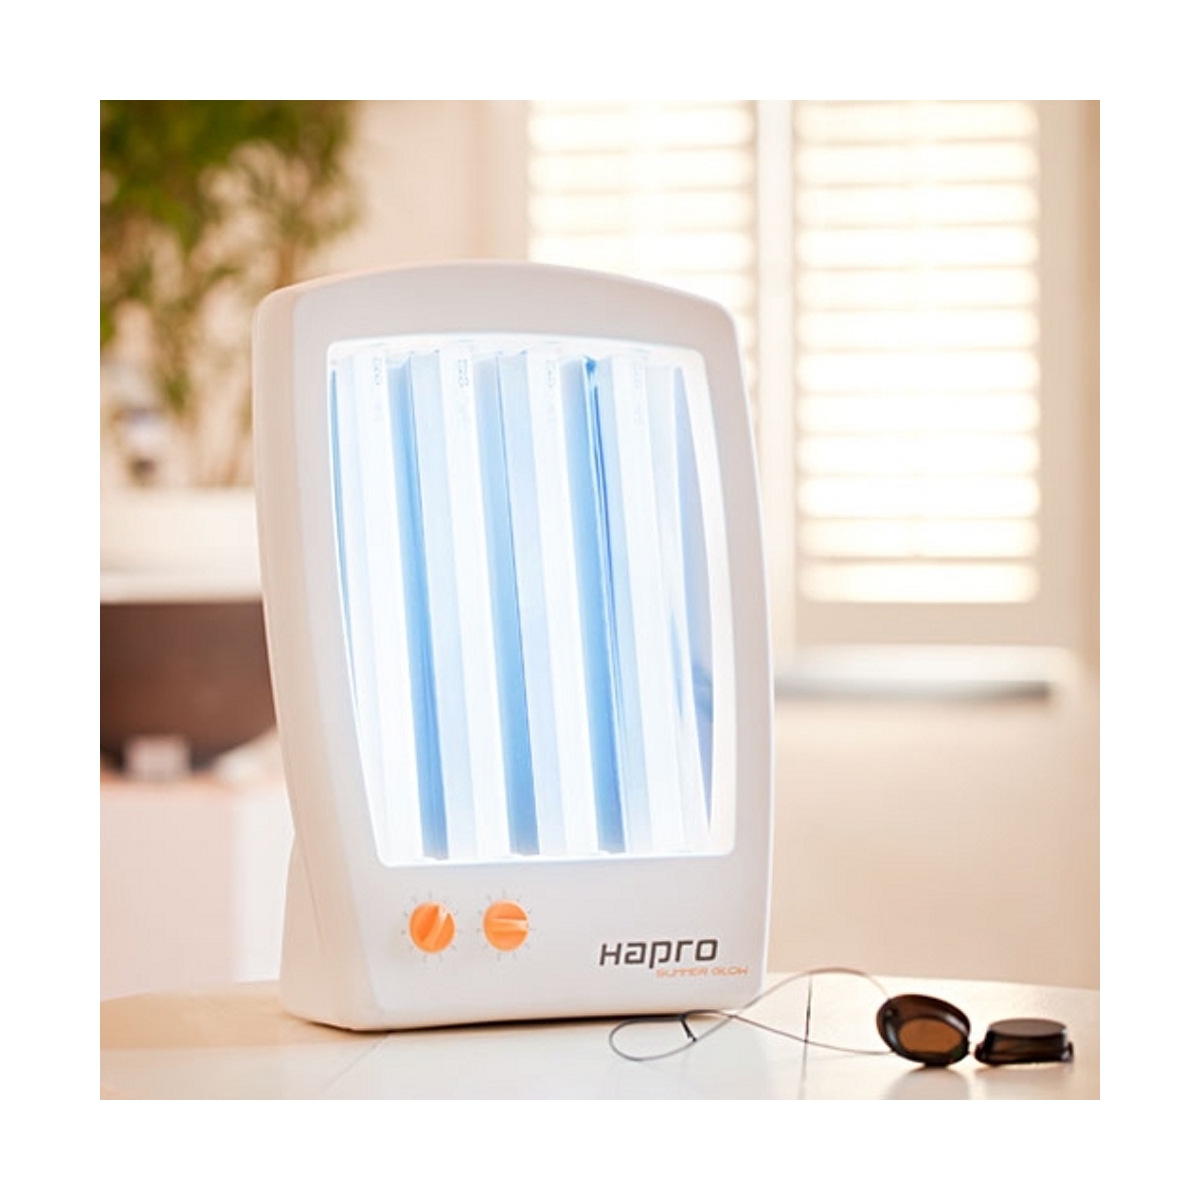 Hapro HB175 Solarium facial home - Home Tanning - Hapro